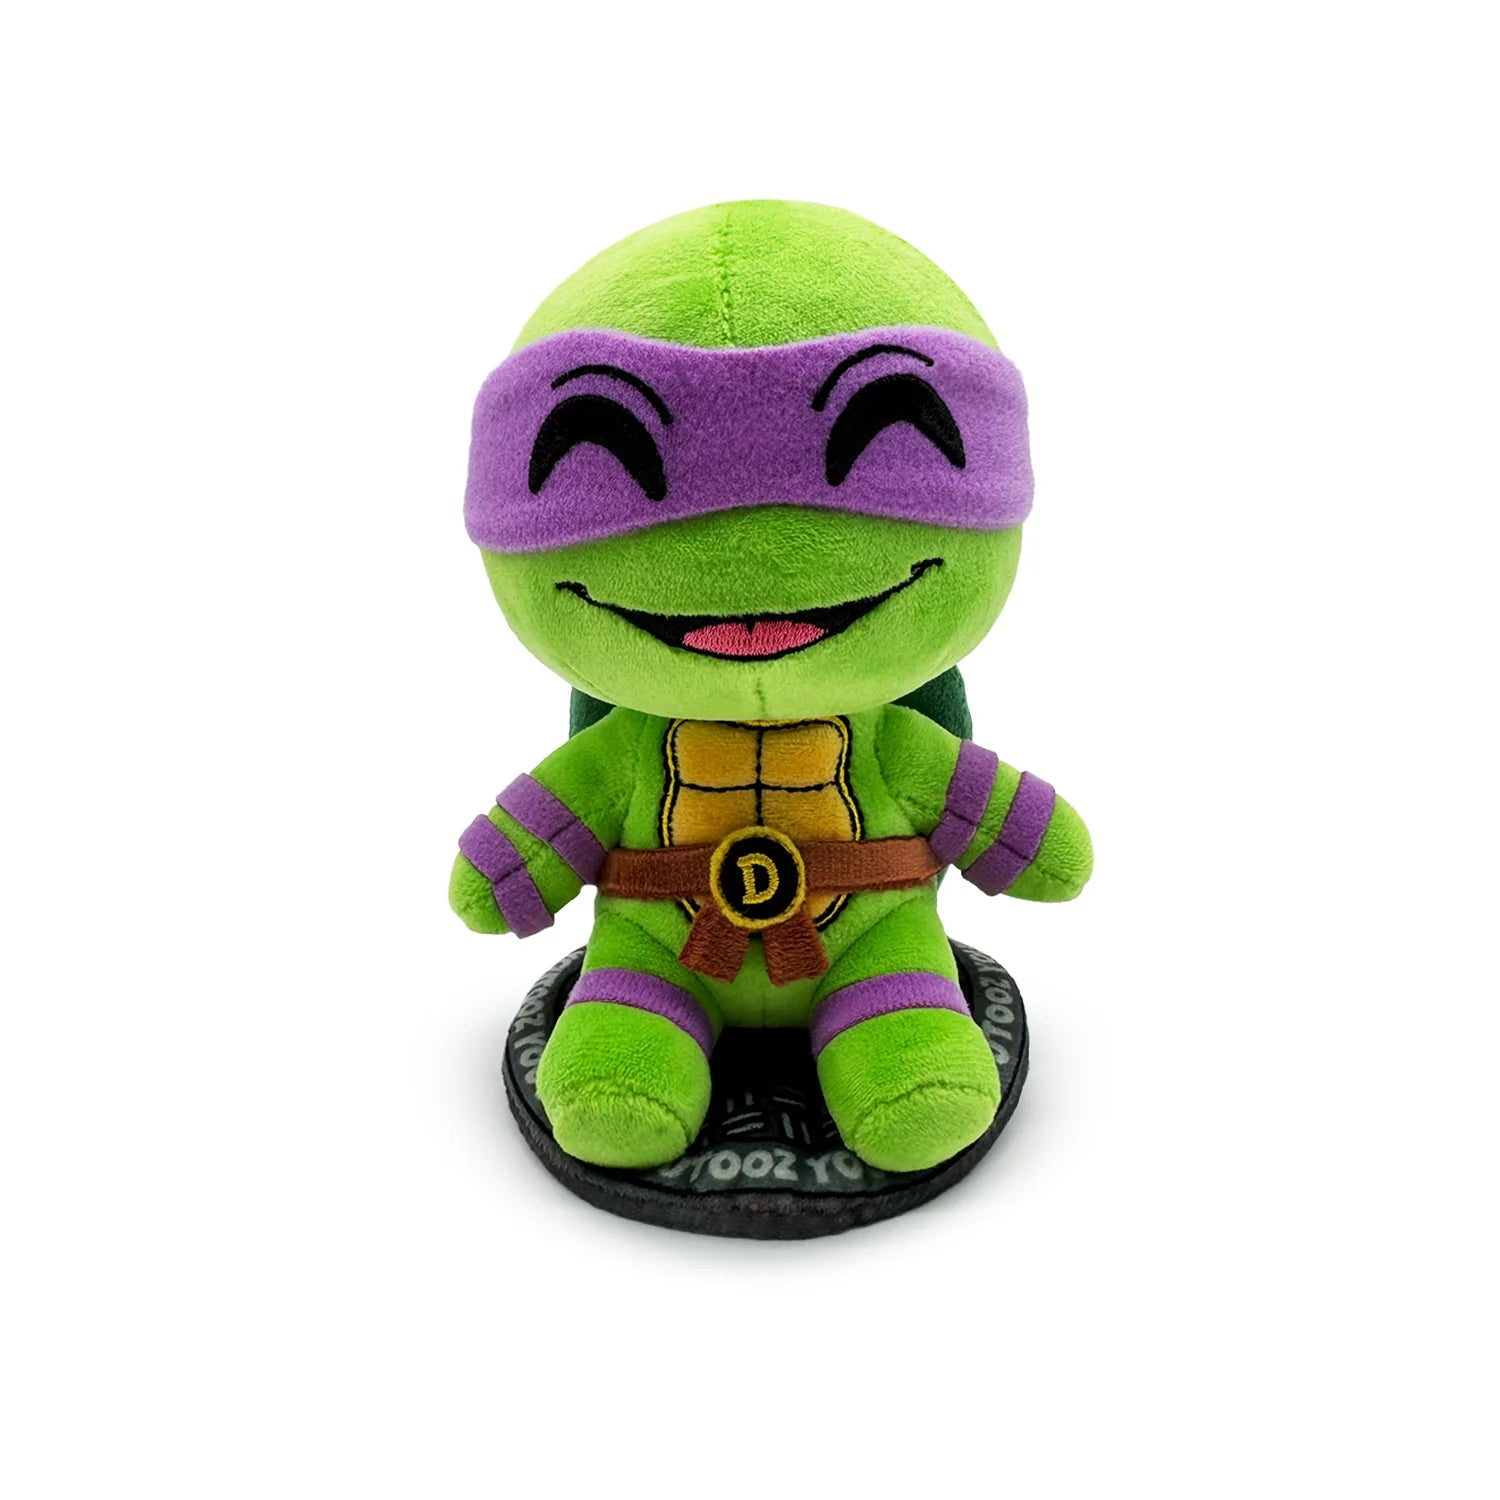 Youtooz Plush Shoulder Rider: TMNT Tortugas Ninja - Donatello Peluche 6 Pulgadas